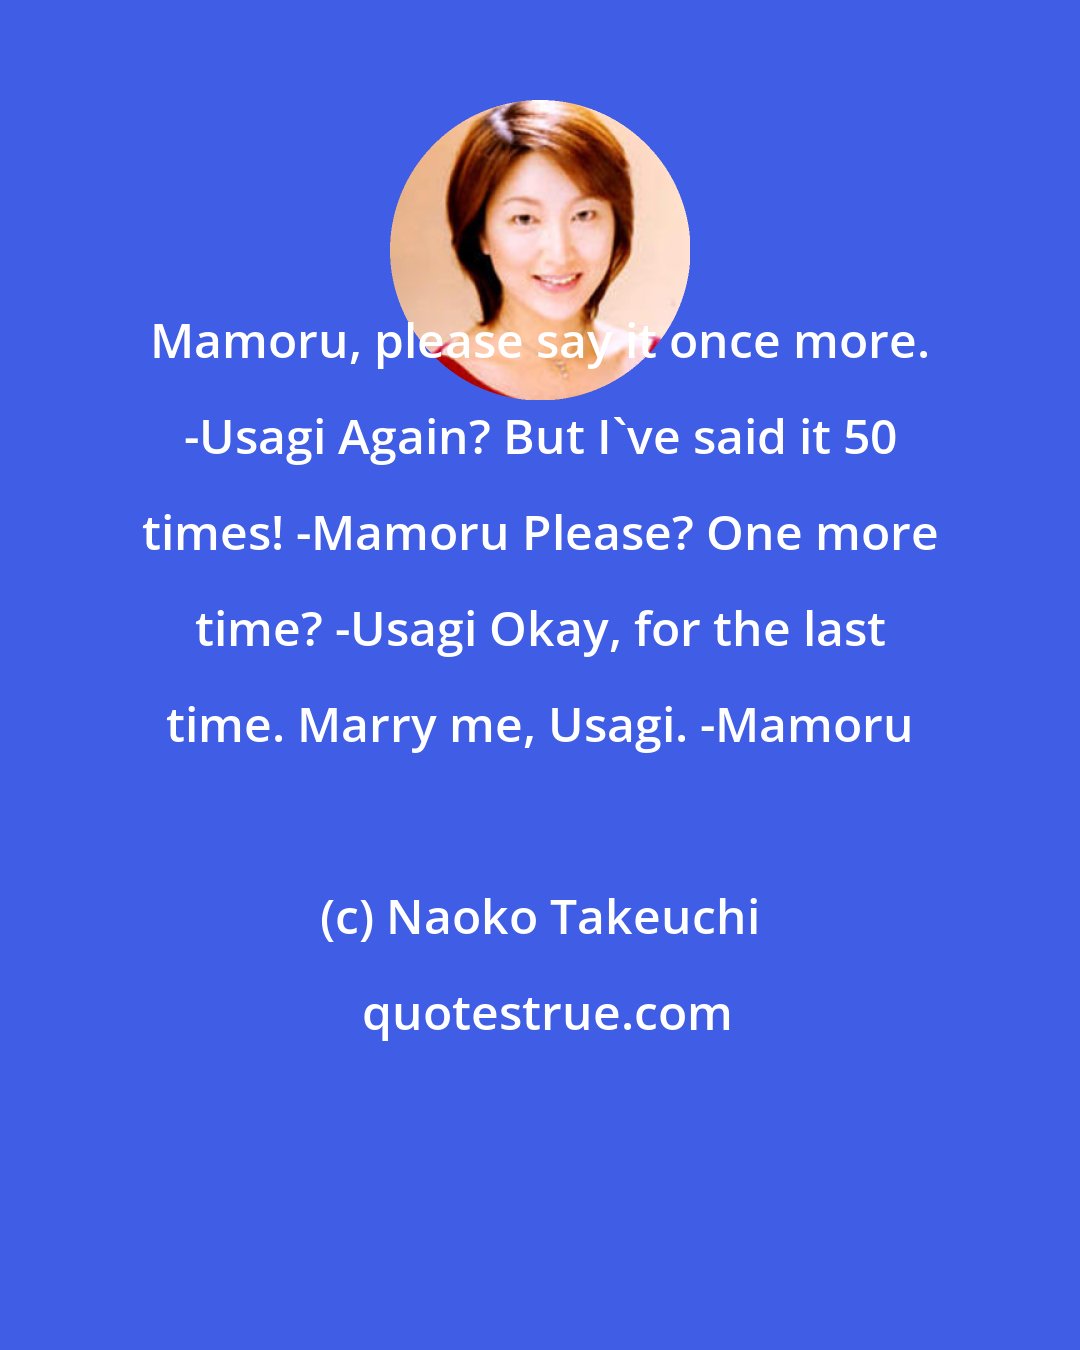 Naoko Takeuchi: Mamoru, please say it once more. -Usagi Again? But I've said it 50 times! -Mamoru Please? One more time? -Usagi Okay, for the last time. Marry me, Usagi. -Mamoru